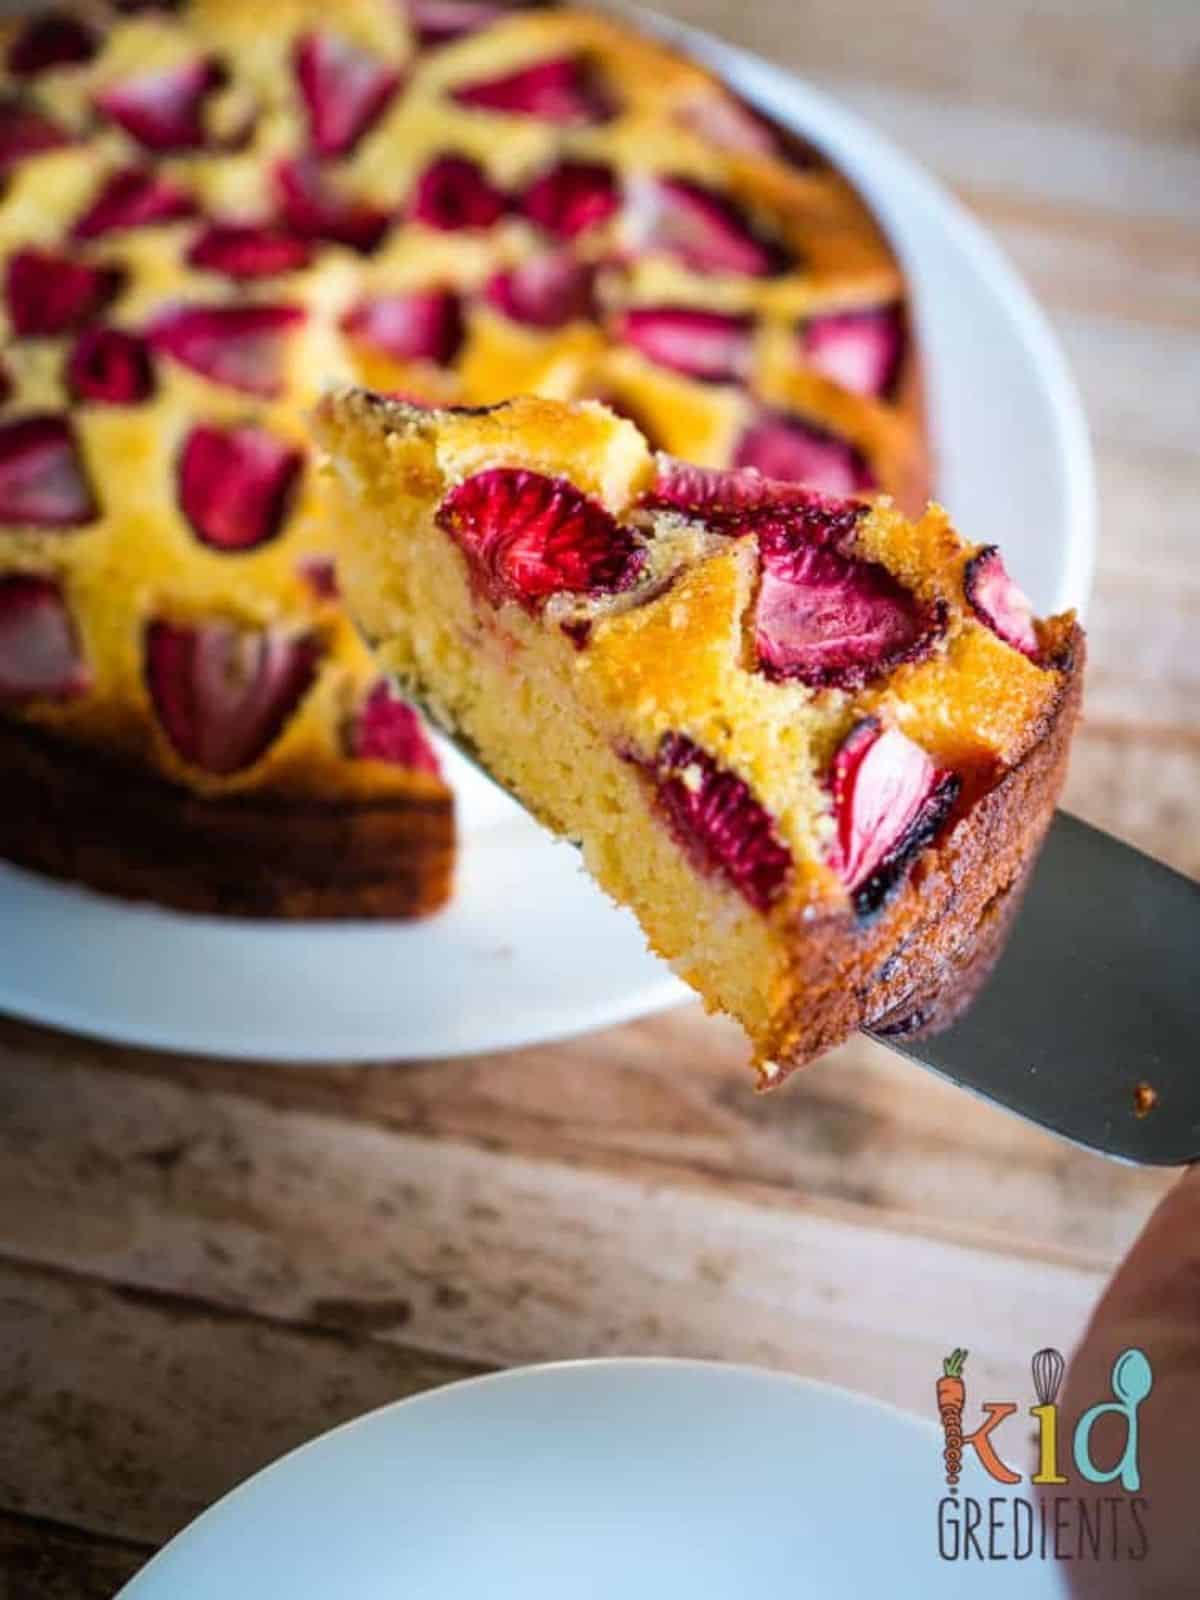 A slice of strawberry and lemon polenta cake on a cake slicer